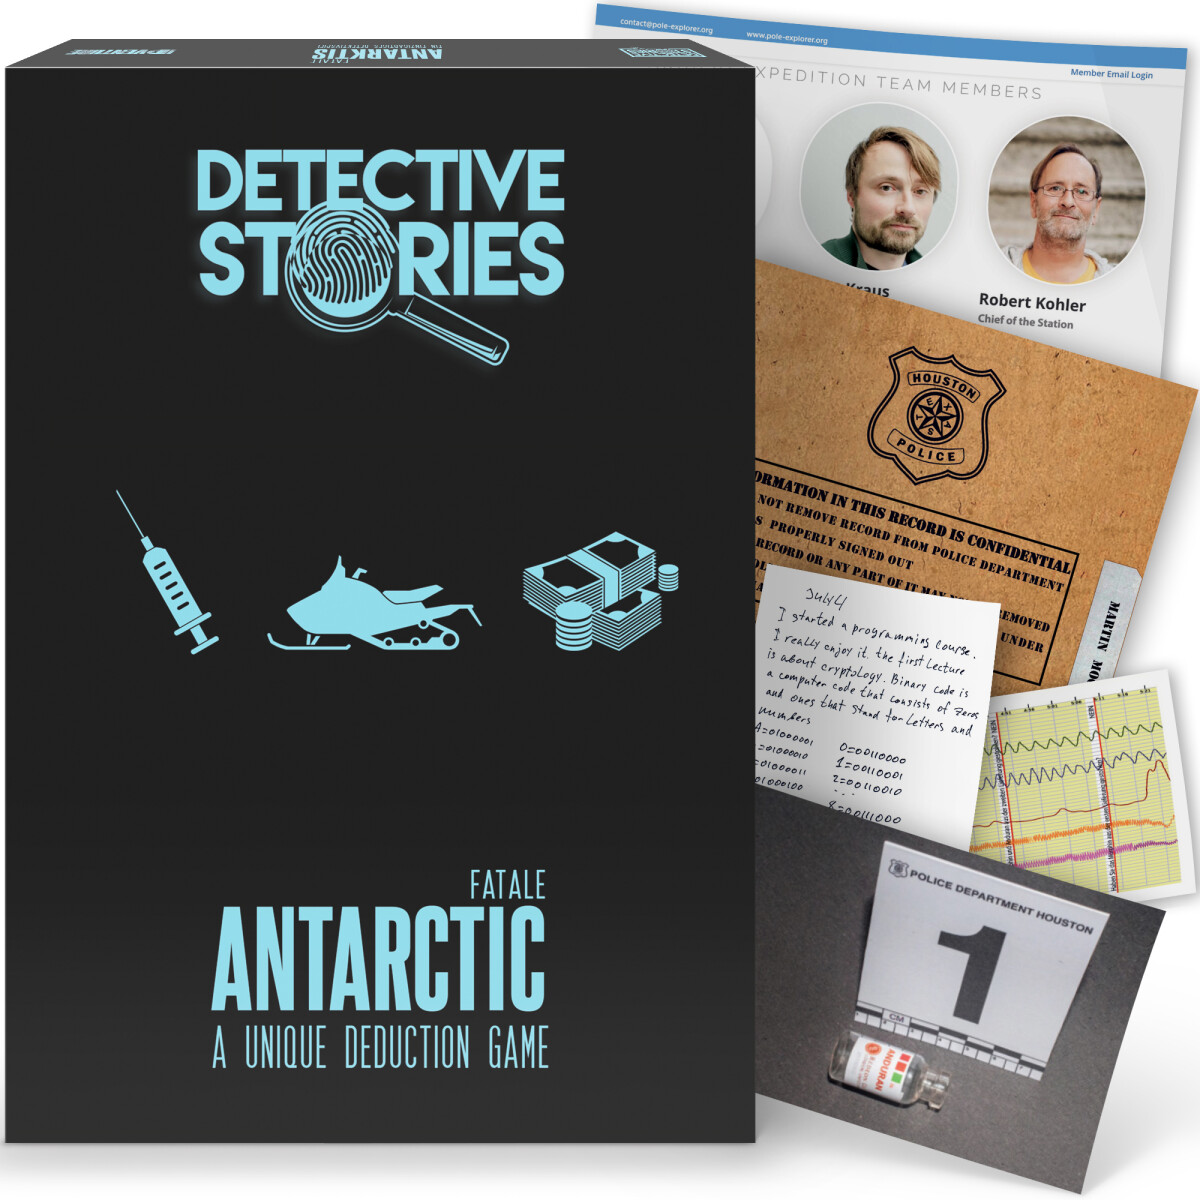 Detective Stories - Case 2 Fatale Antartic